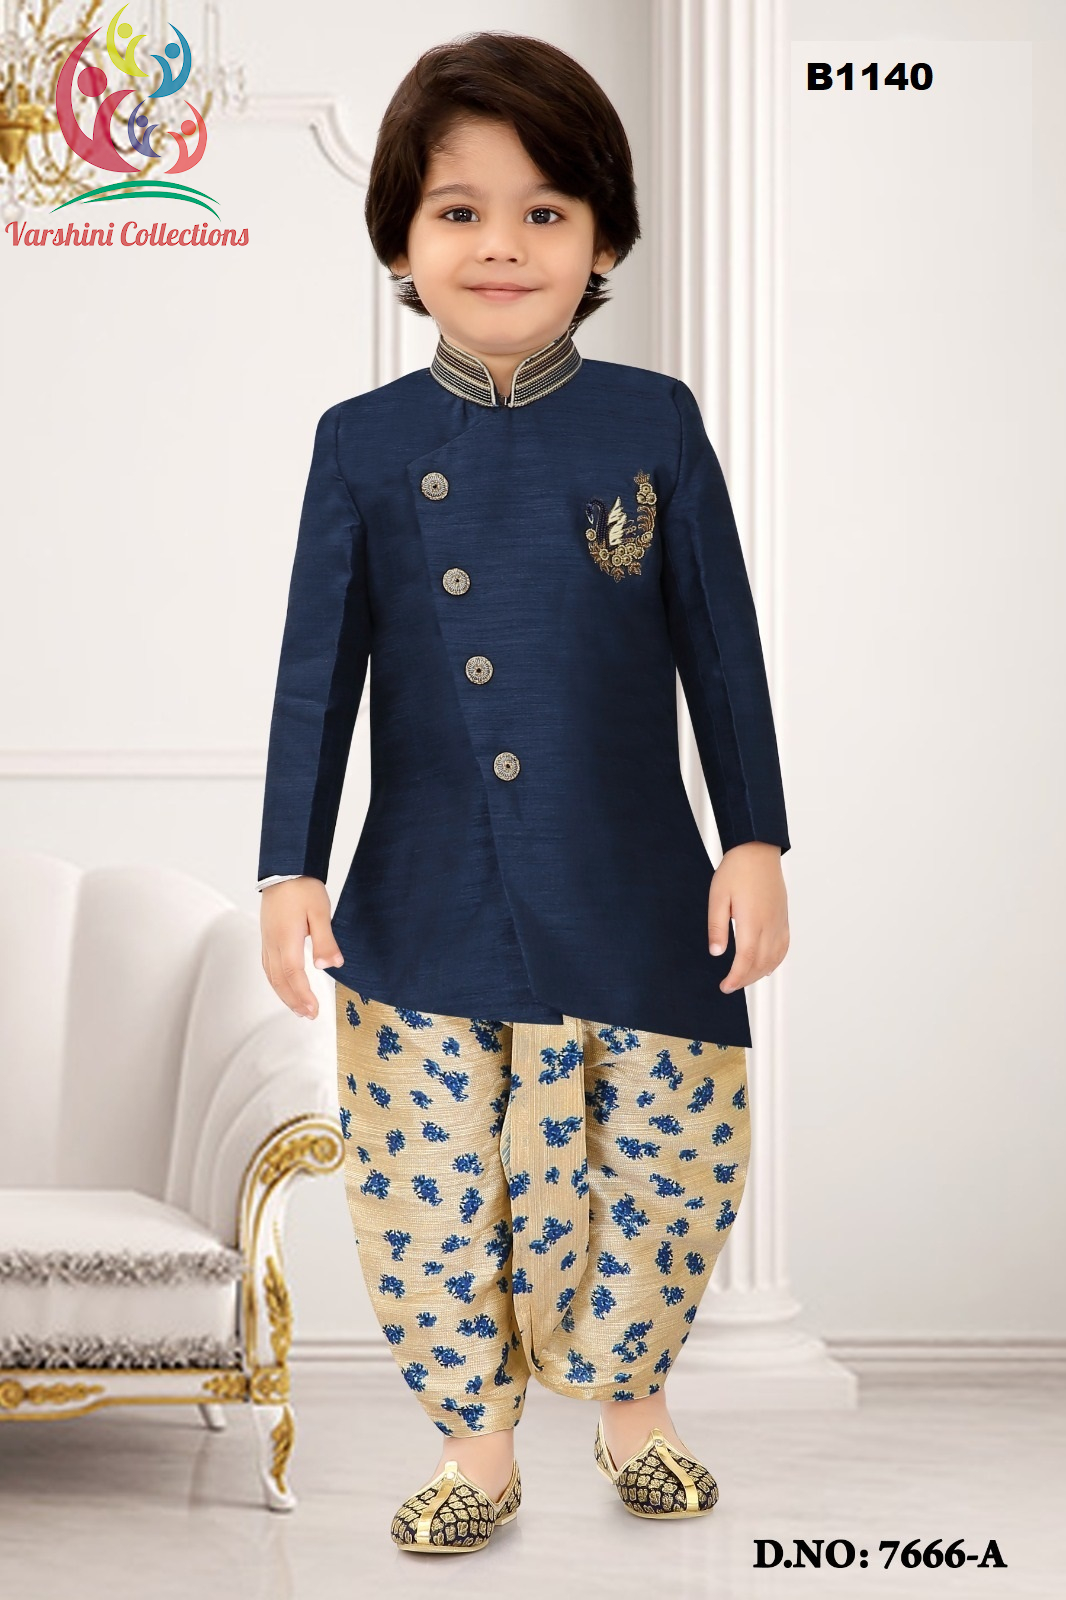 navy blue jodhpuri suit